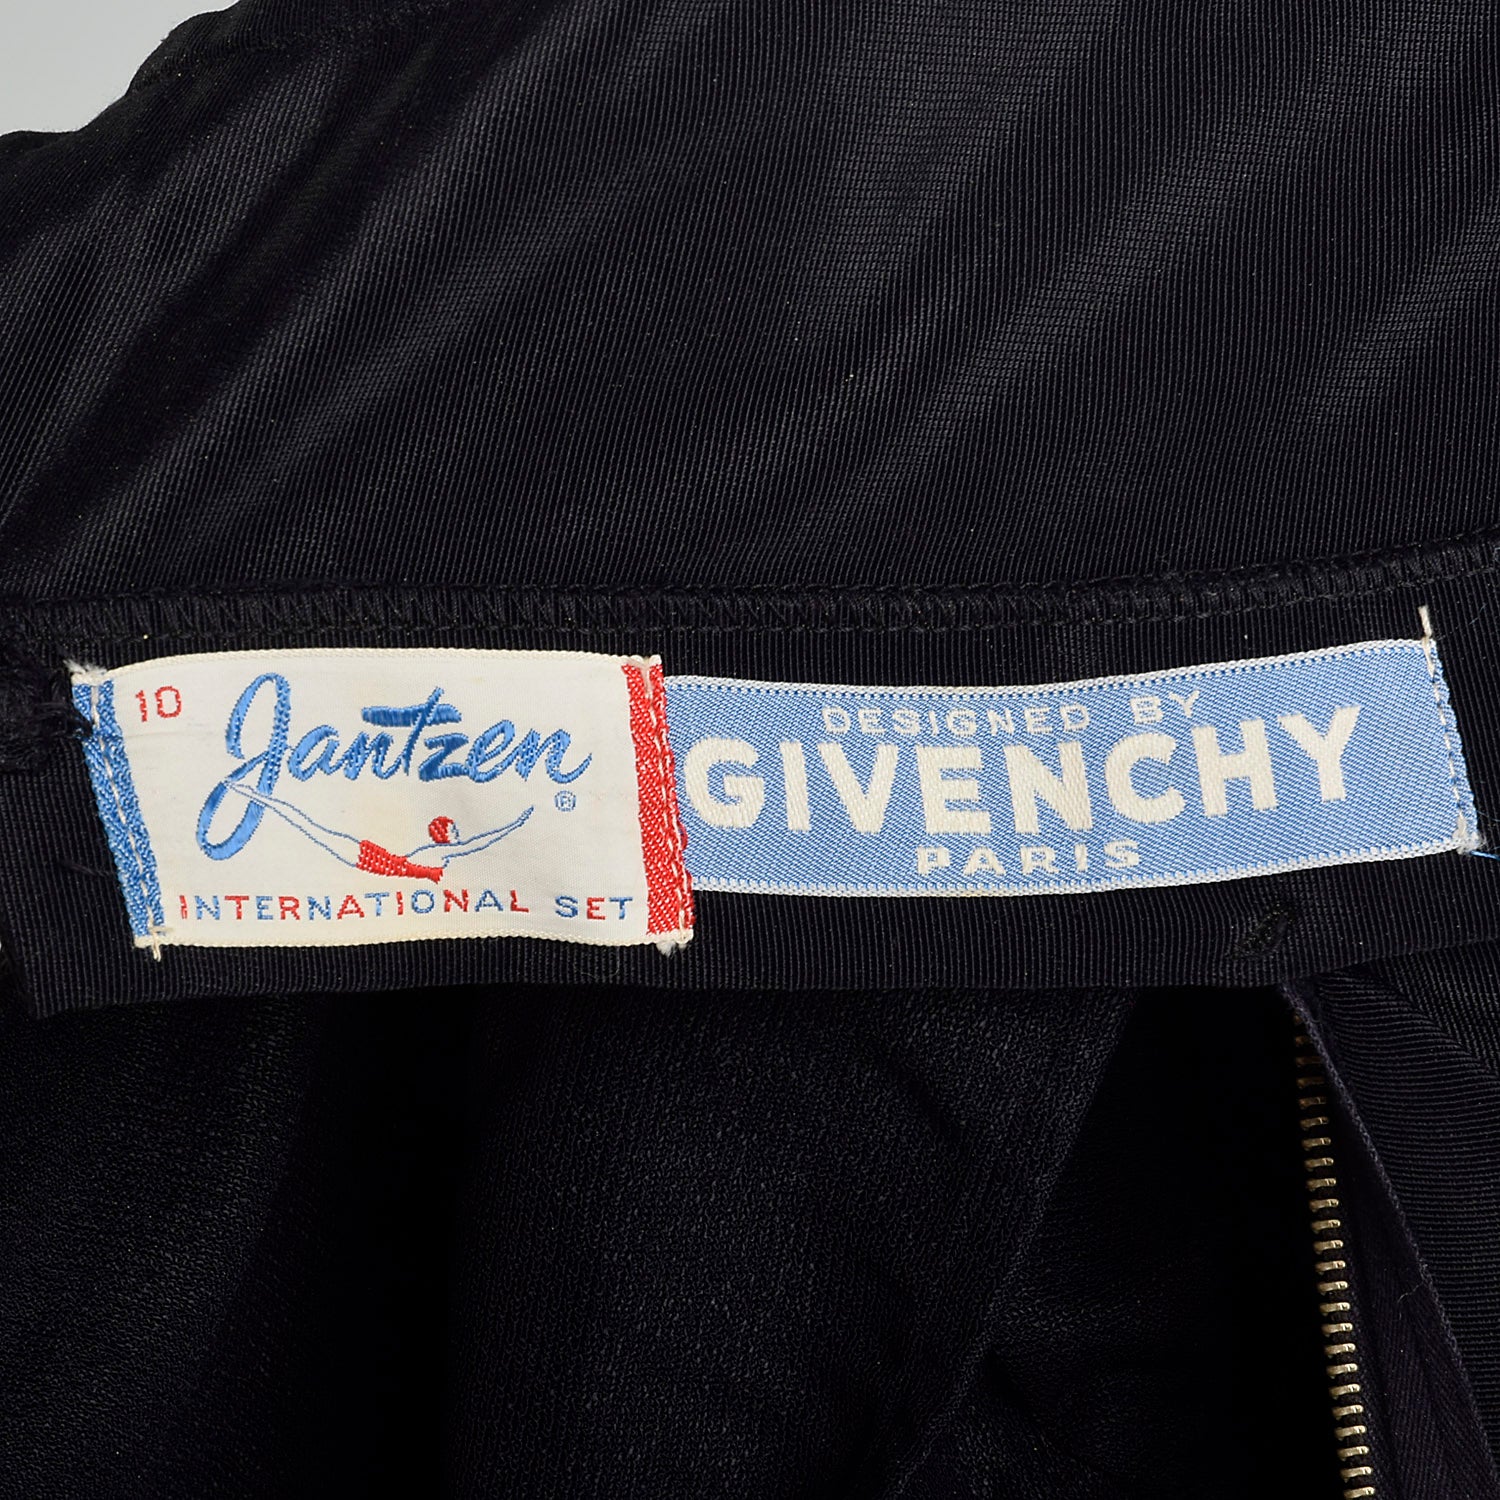 1957-1958  Givenchy "Antibes" Paris Collection for Jantzen International Set